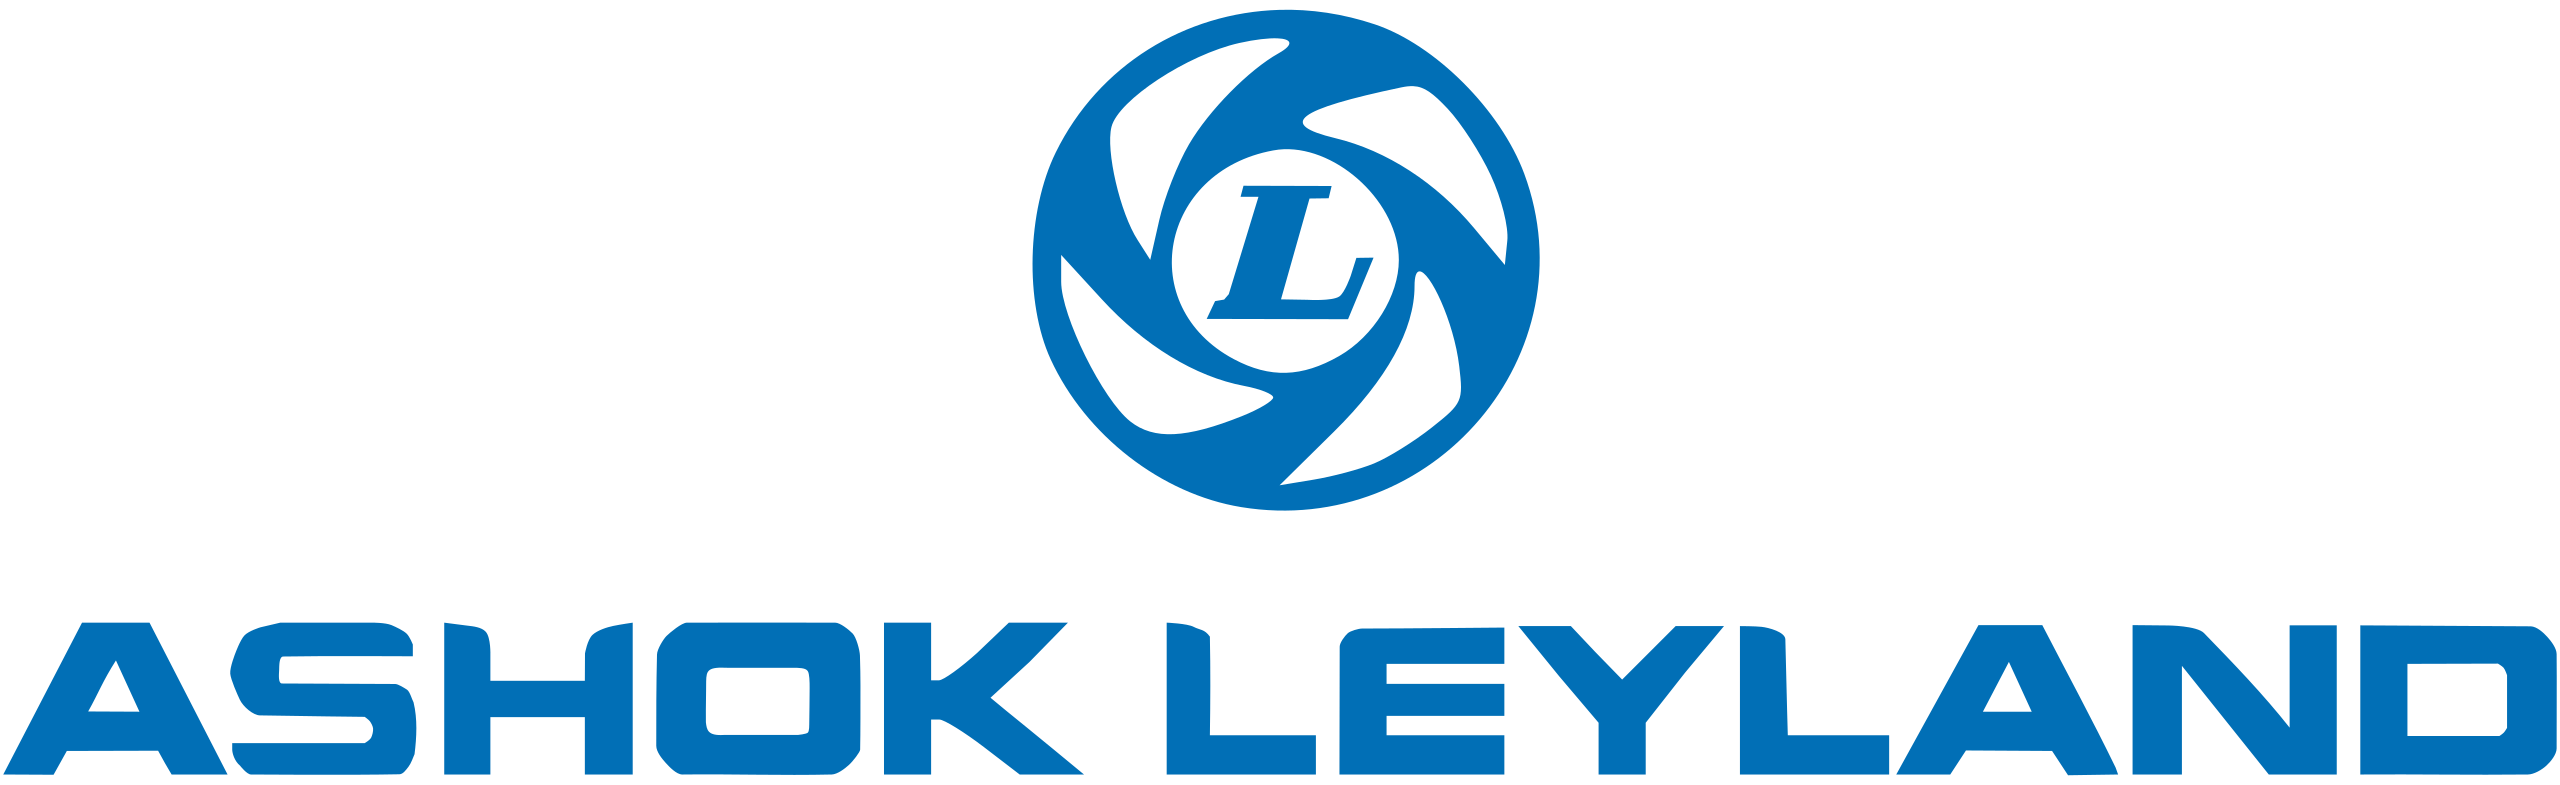 Ashok_Leyland_logo.svg